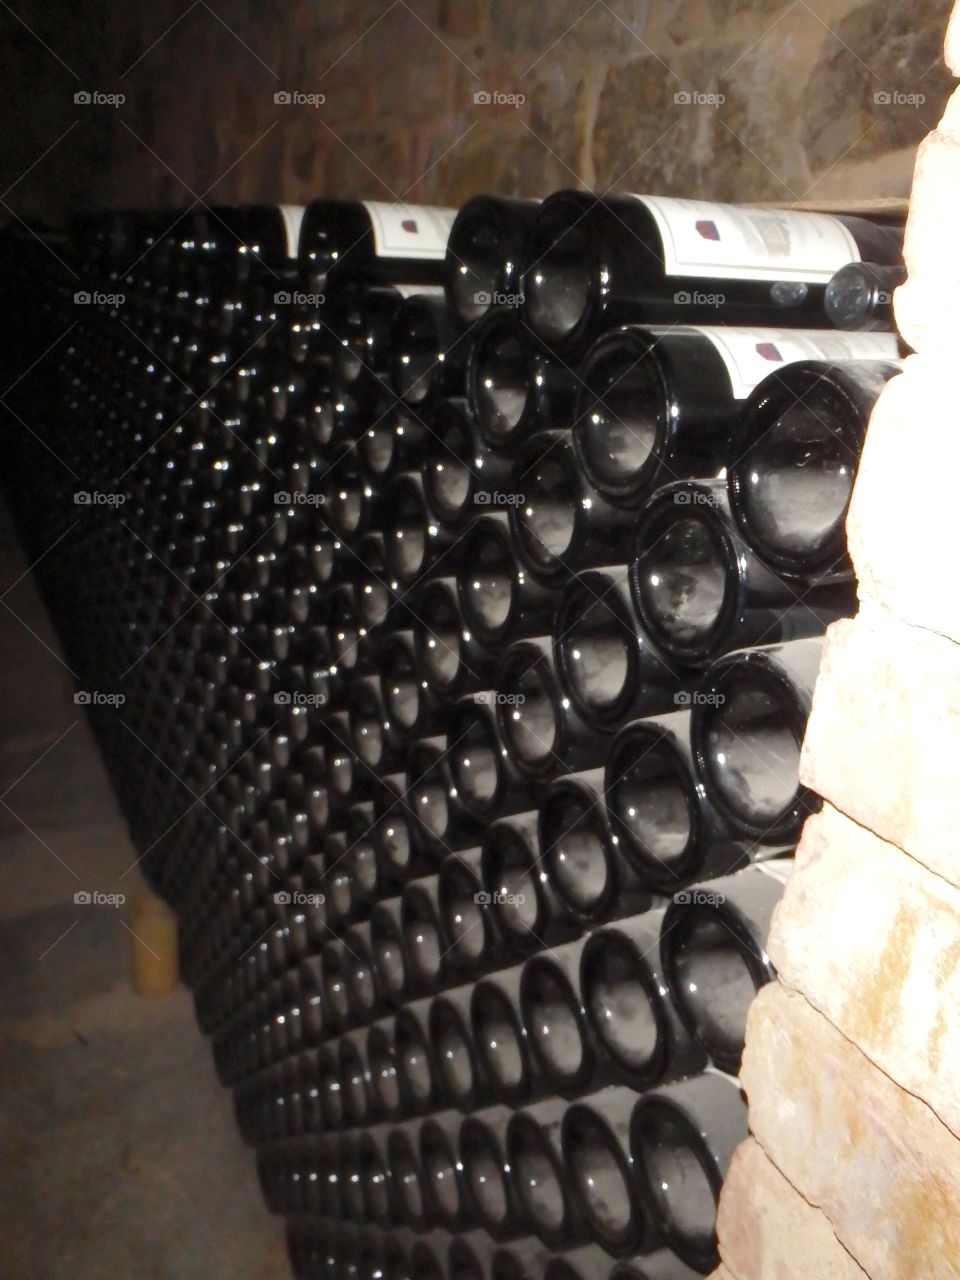 Napa Valley Winery Bottles